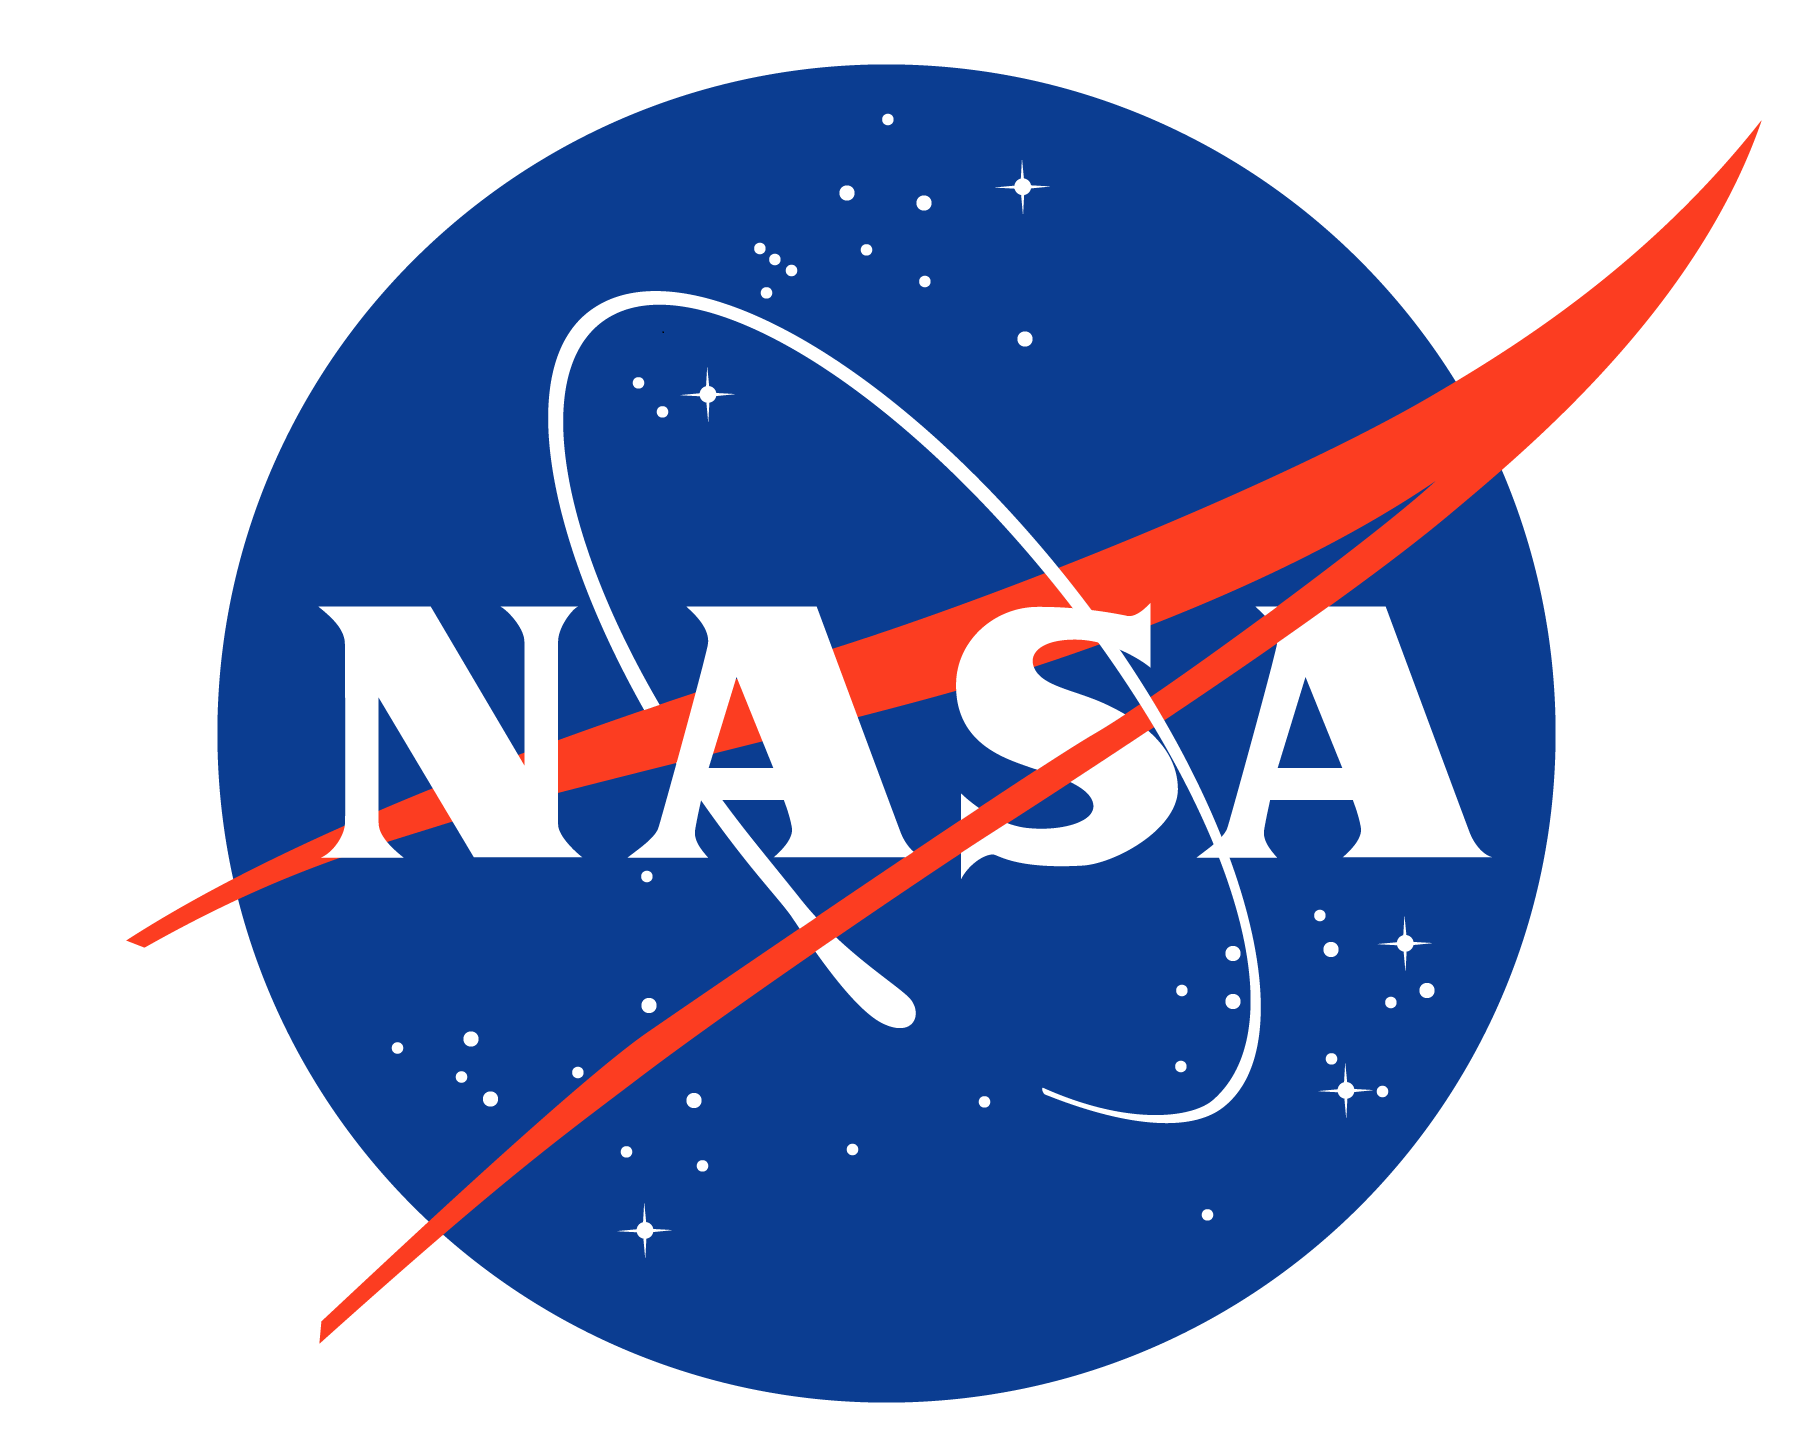 nasa logo rotating orbit